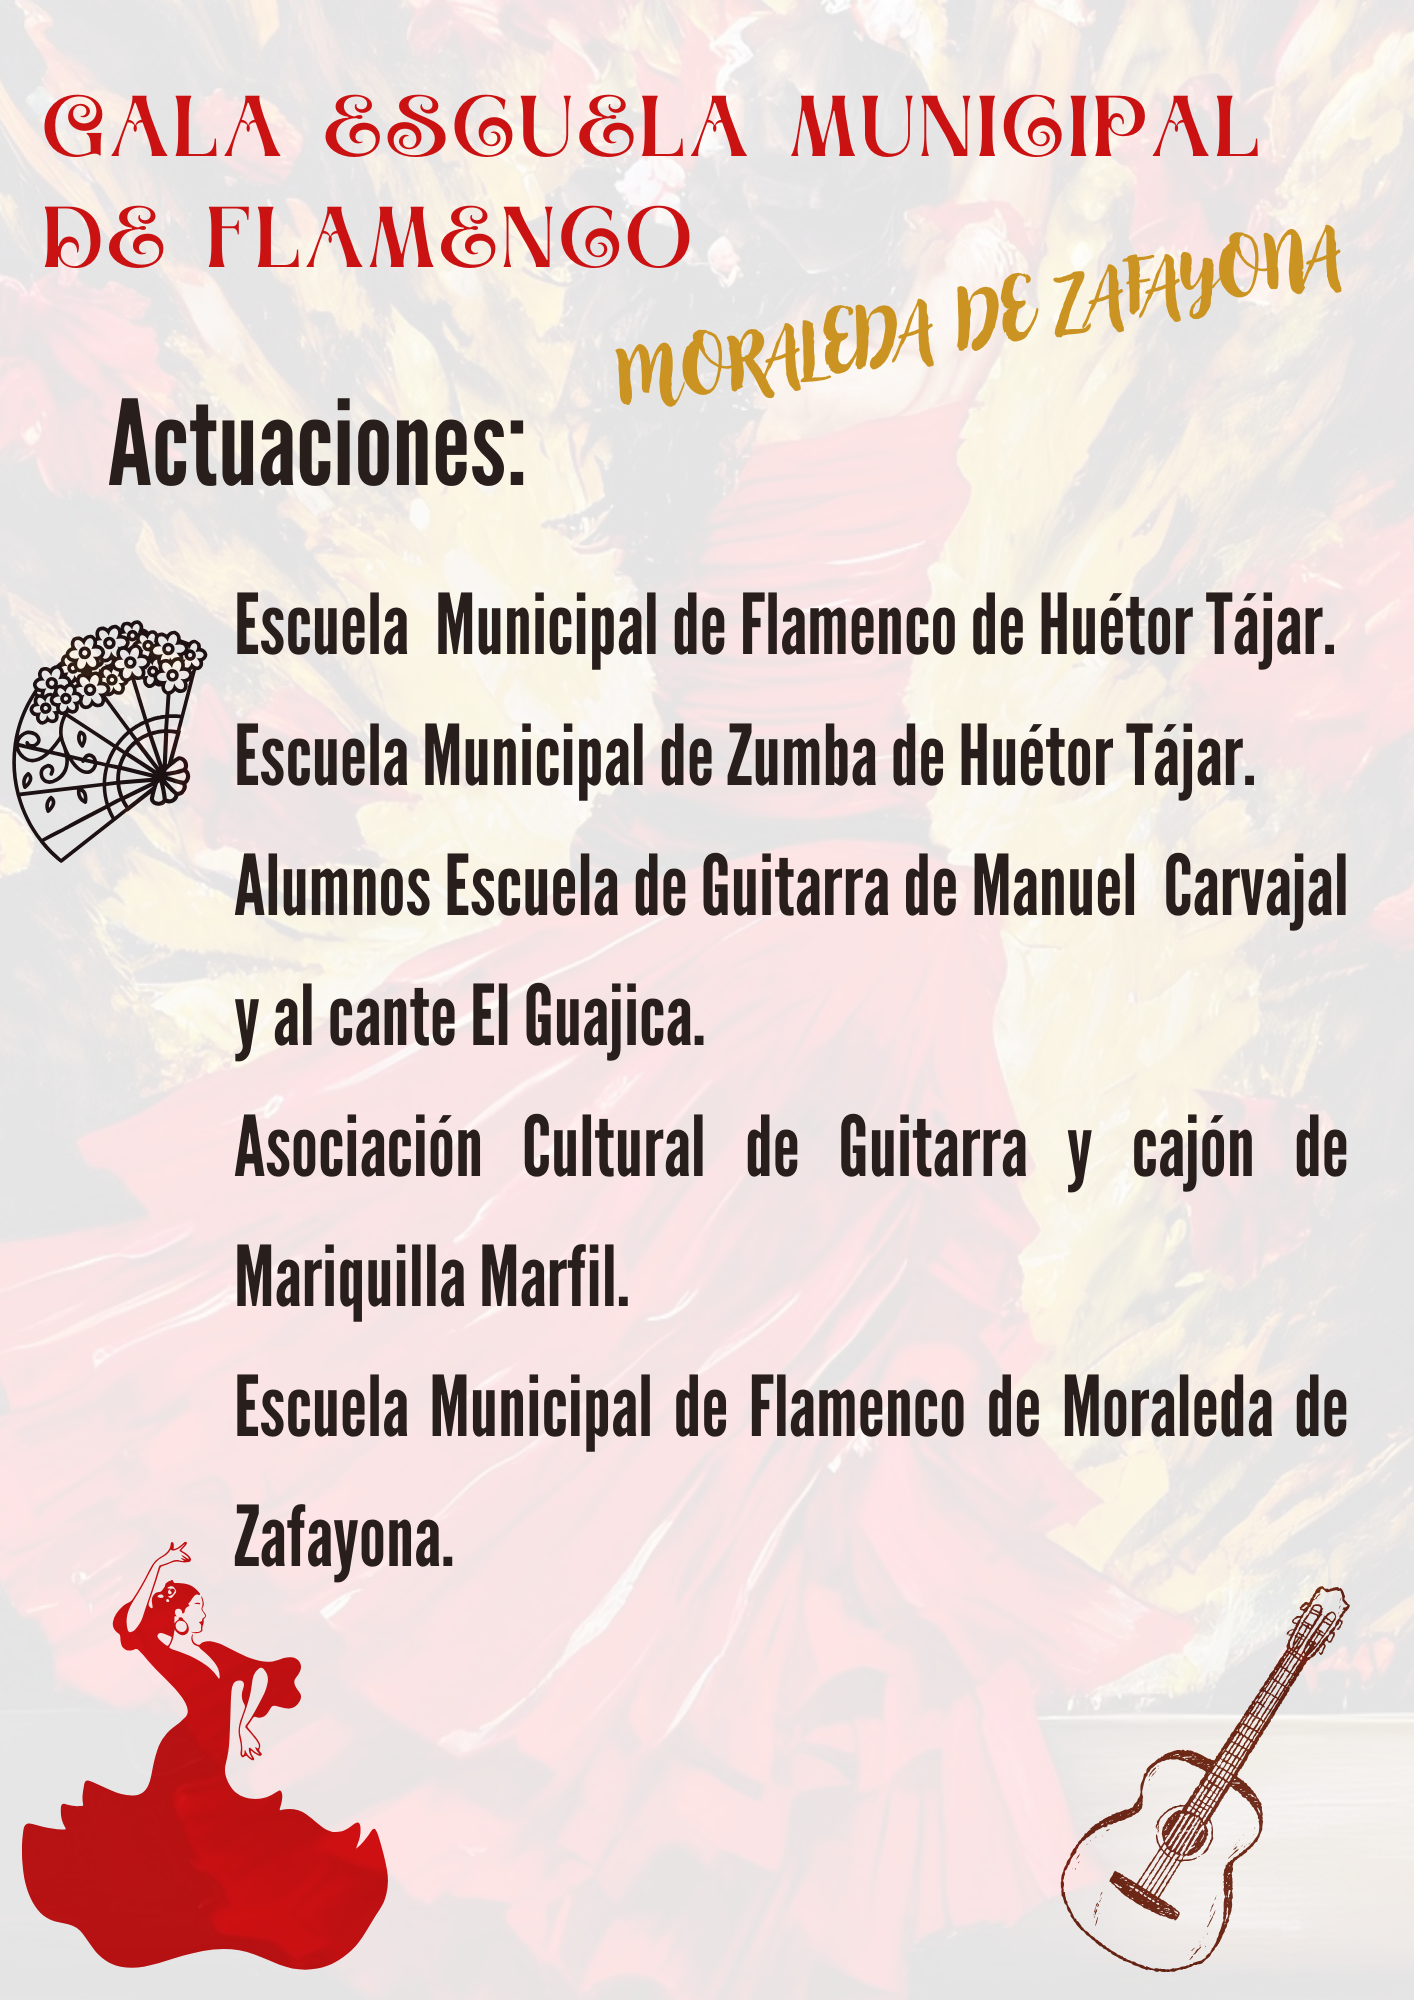 2 Gala Escuela Municipal de Flamenco